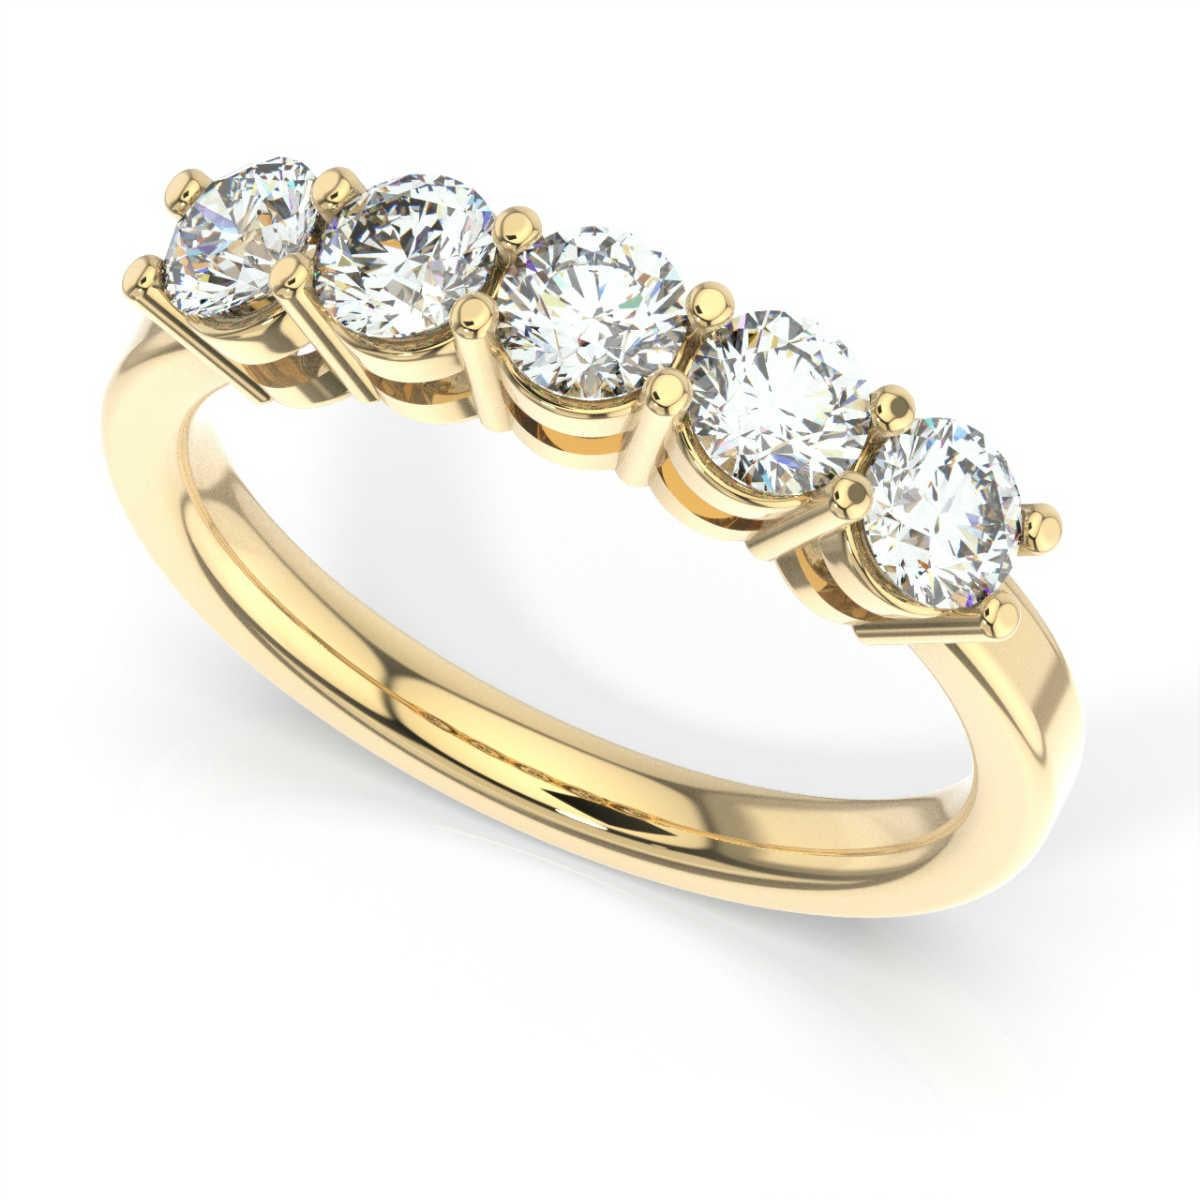 2 carat 5 stone diamond ring